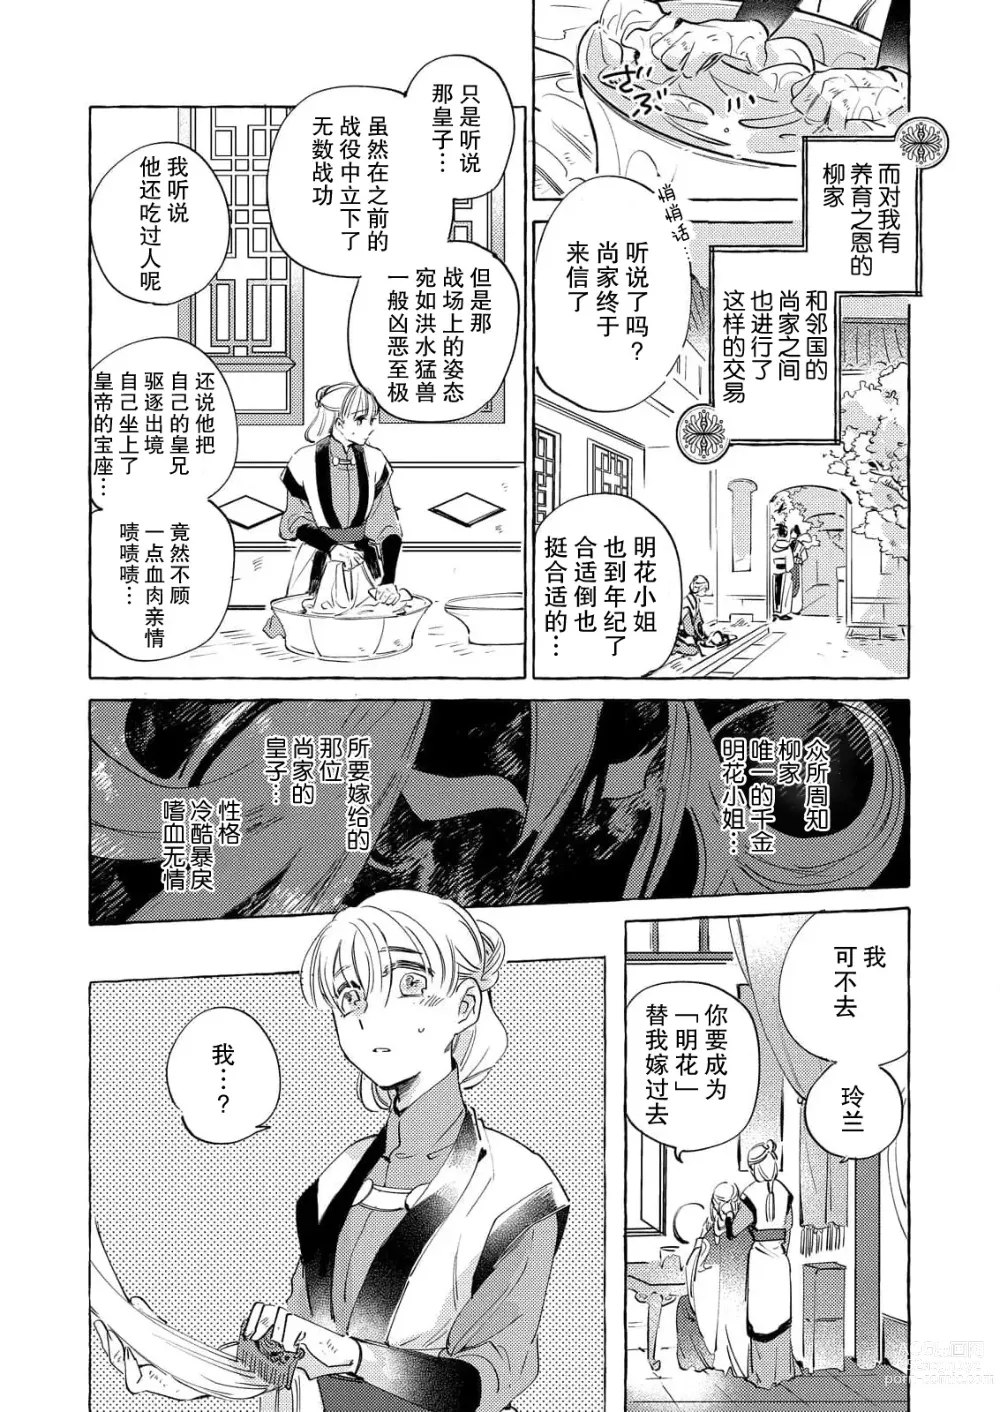 Page 6 of manga 无限宠爱新娘替嫁~冷酷皇子今夜也宠溺入骨~ 1-2 end